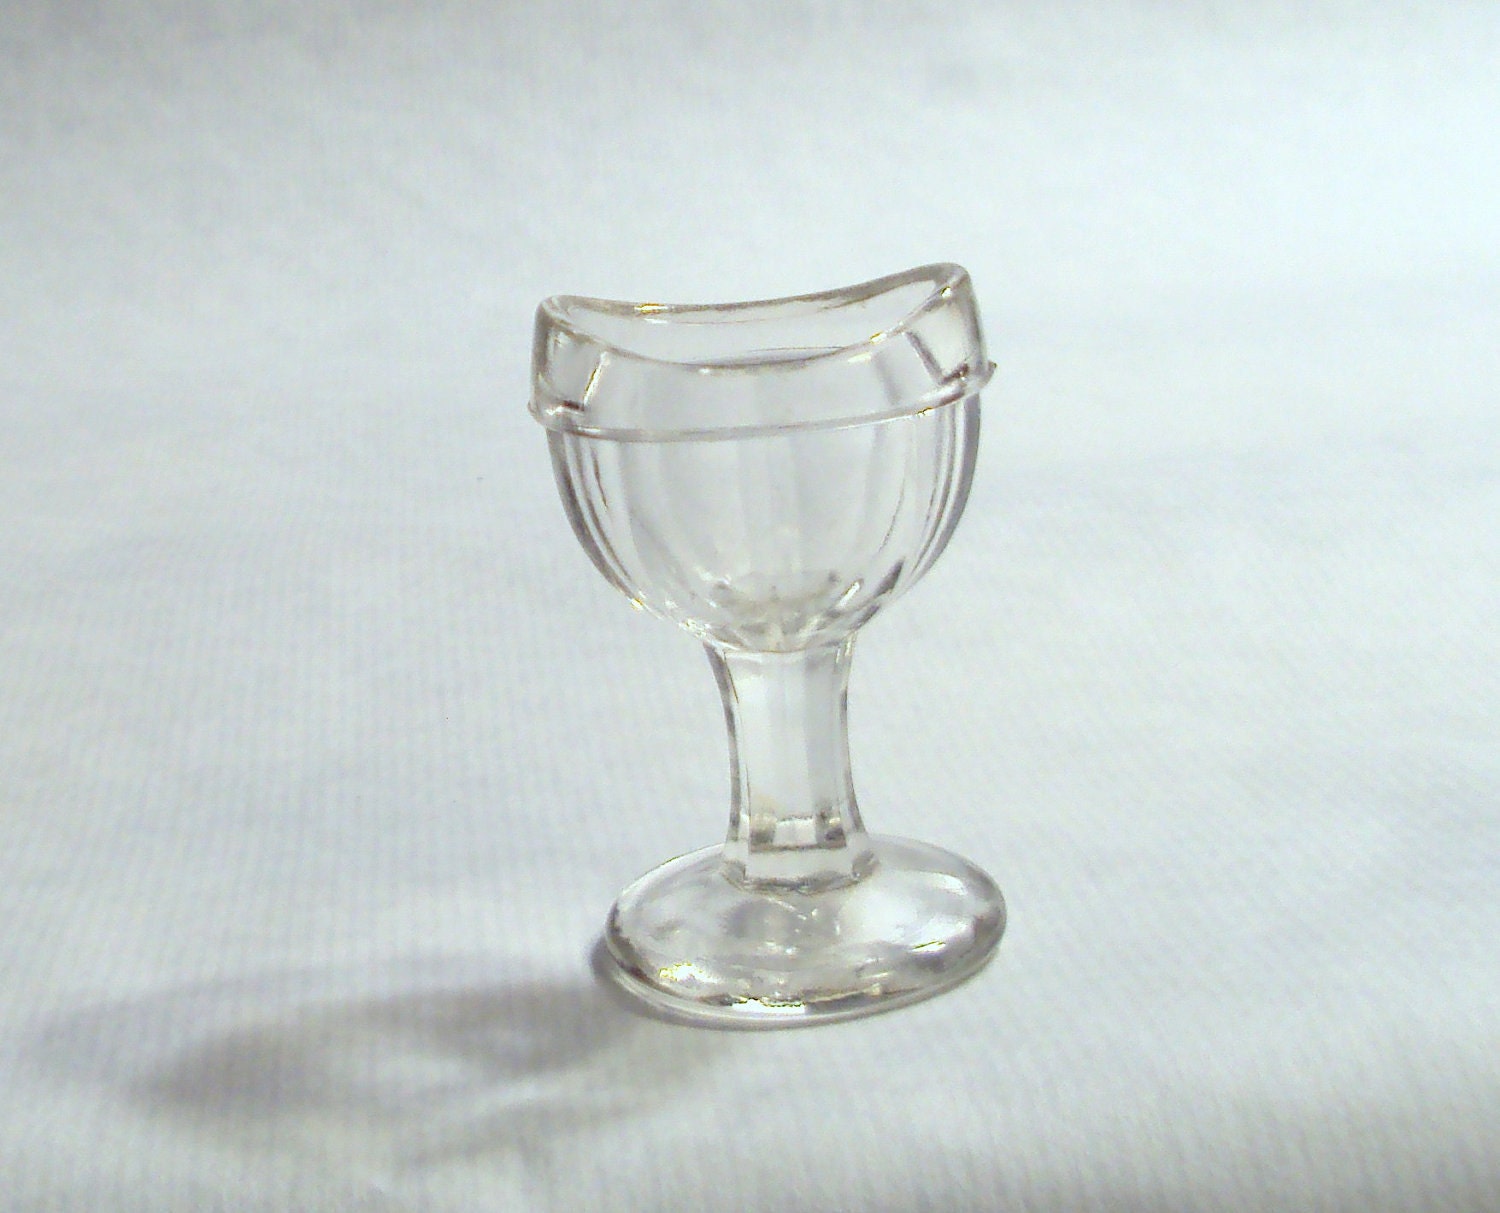 by Pressed cup Eye Vintage Clear Paneled Wash maxhappyfeet eye  Glass Cup vintage